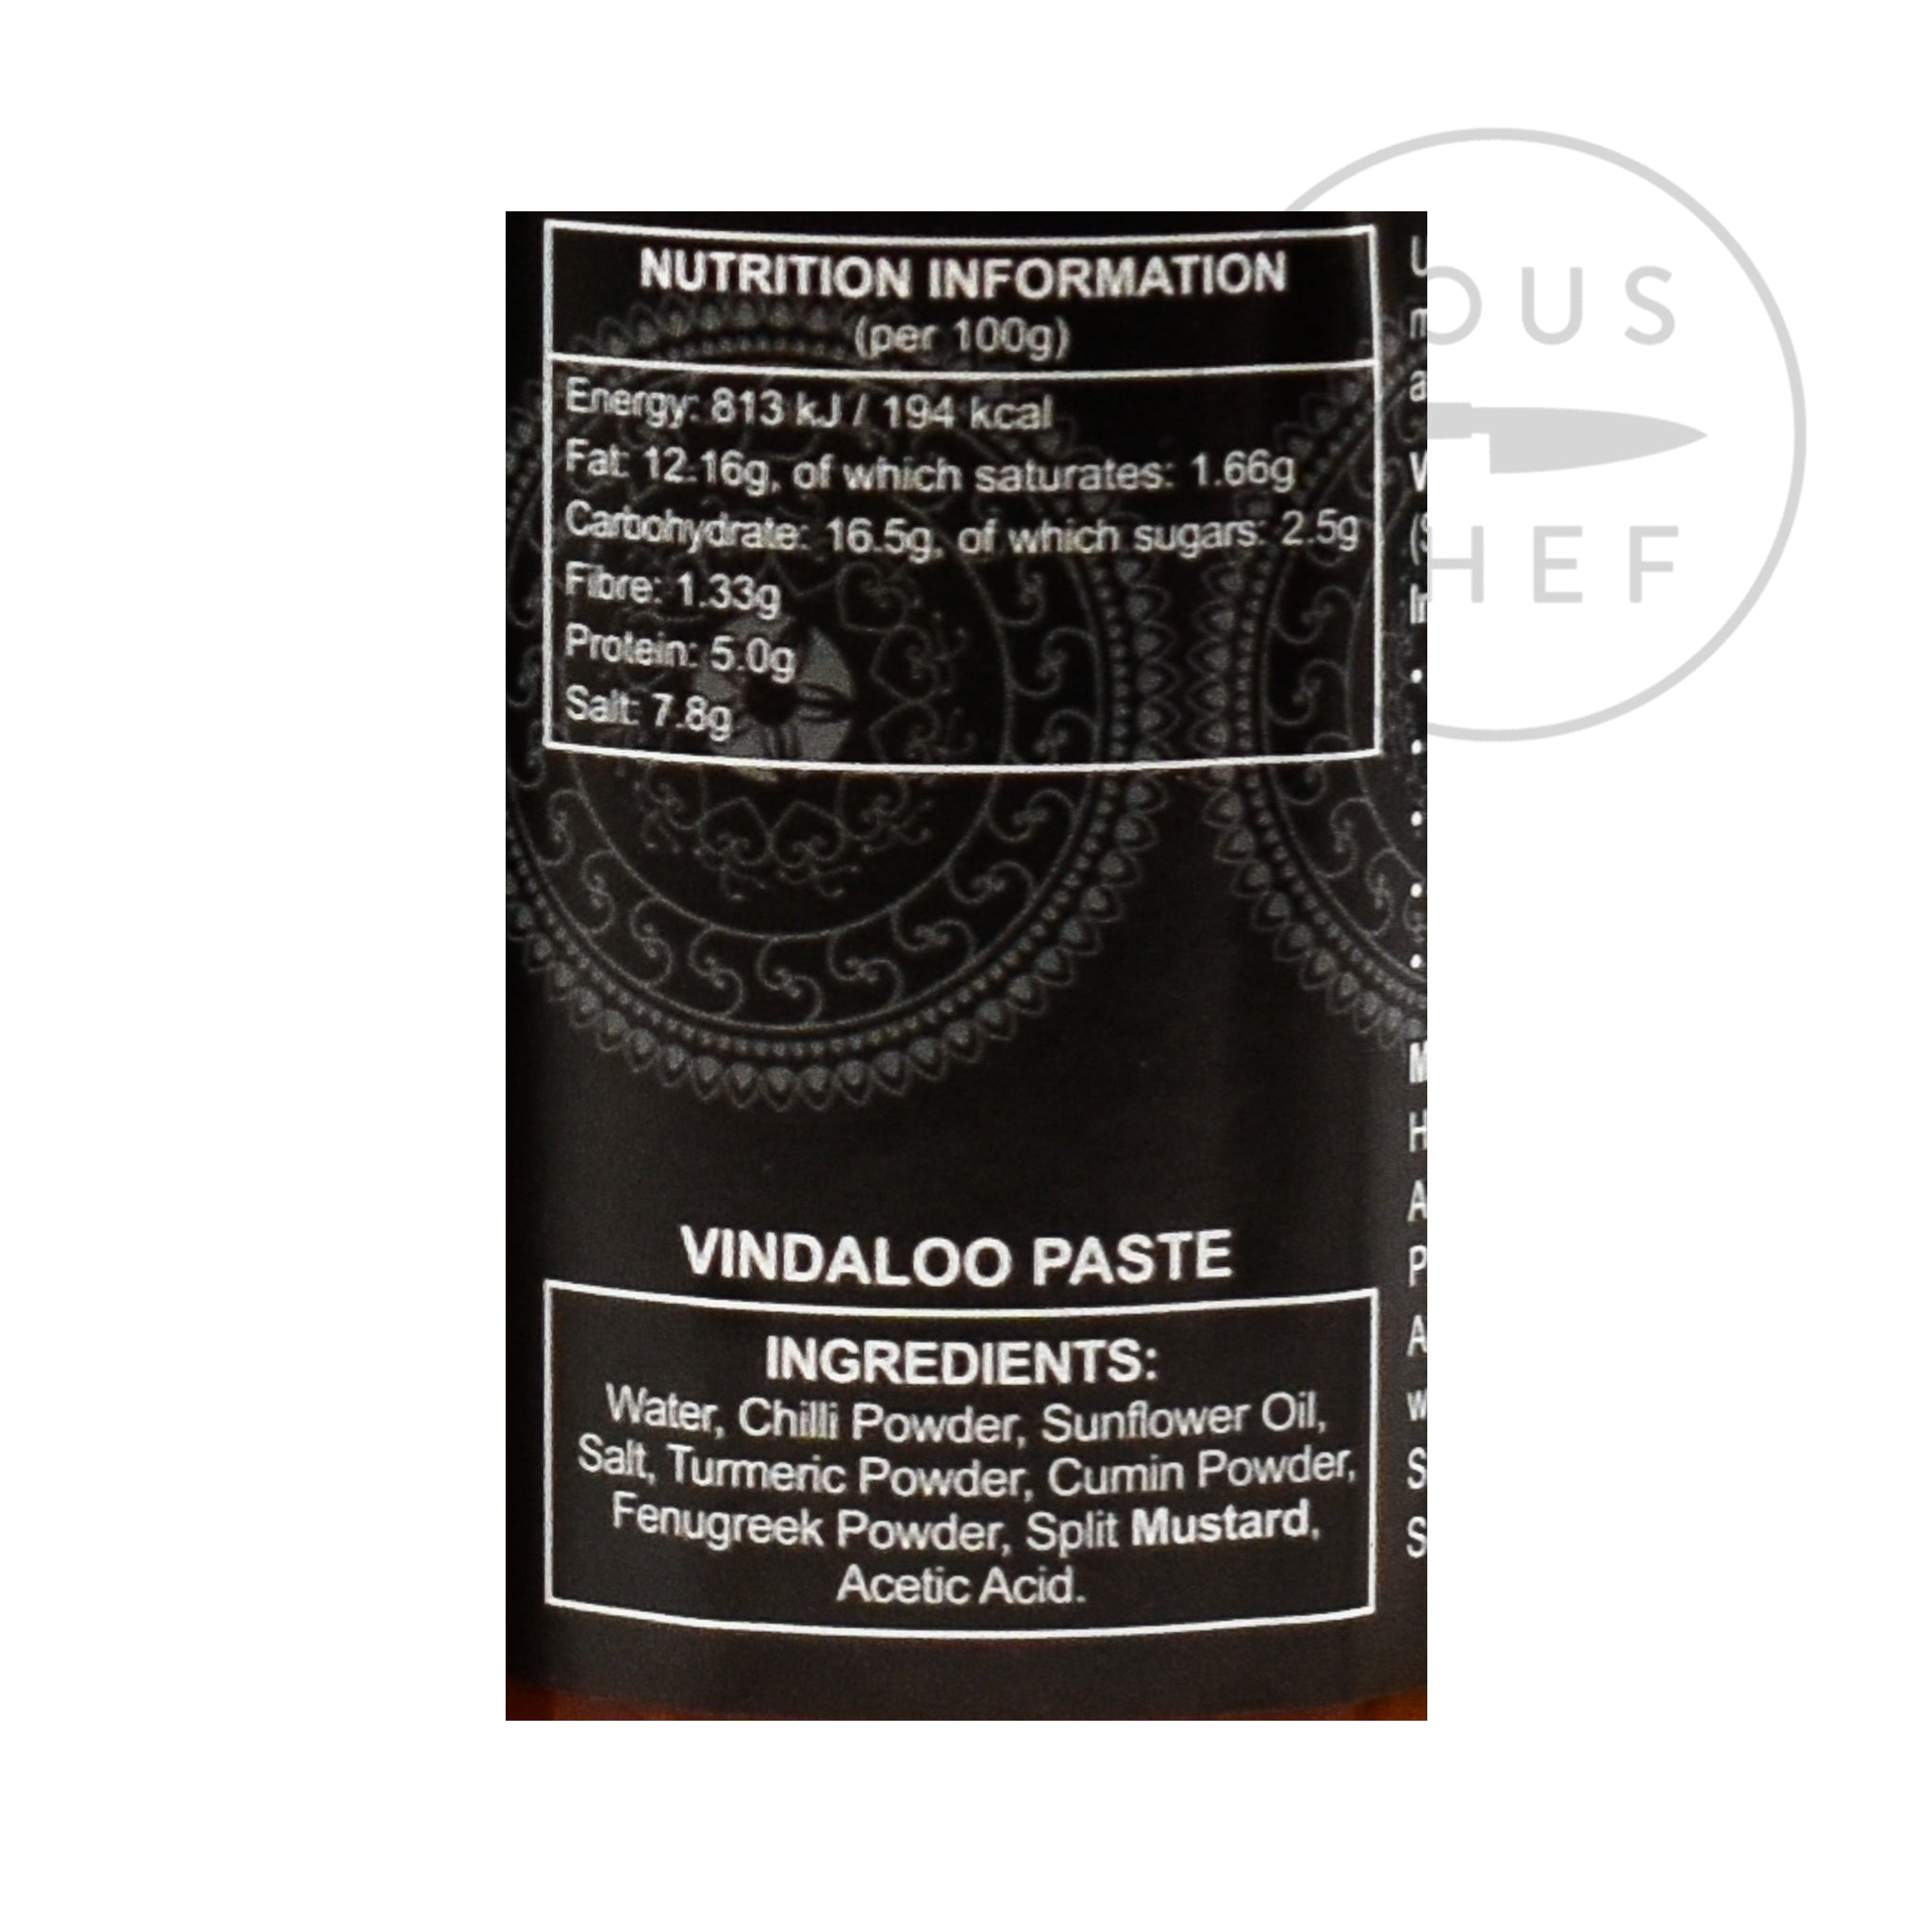 Ferns' Vindaloo Paste 380g nutritional information ingredients